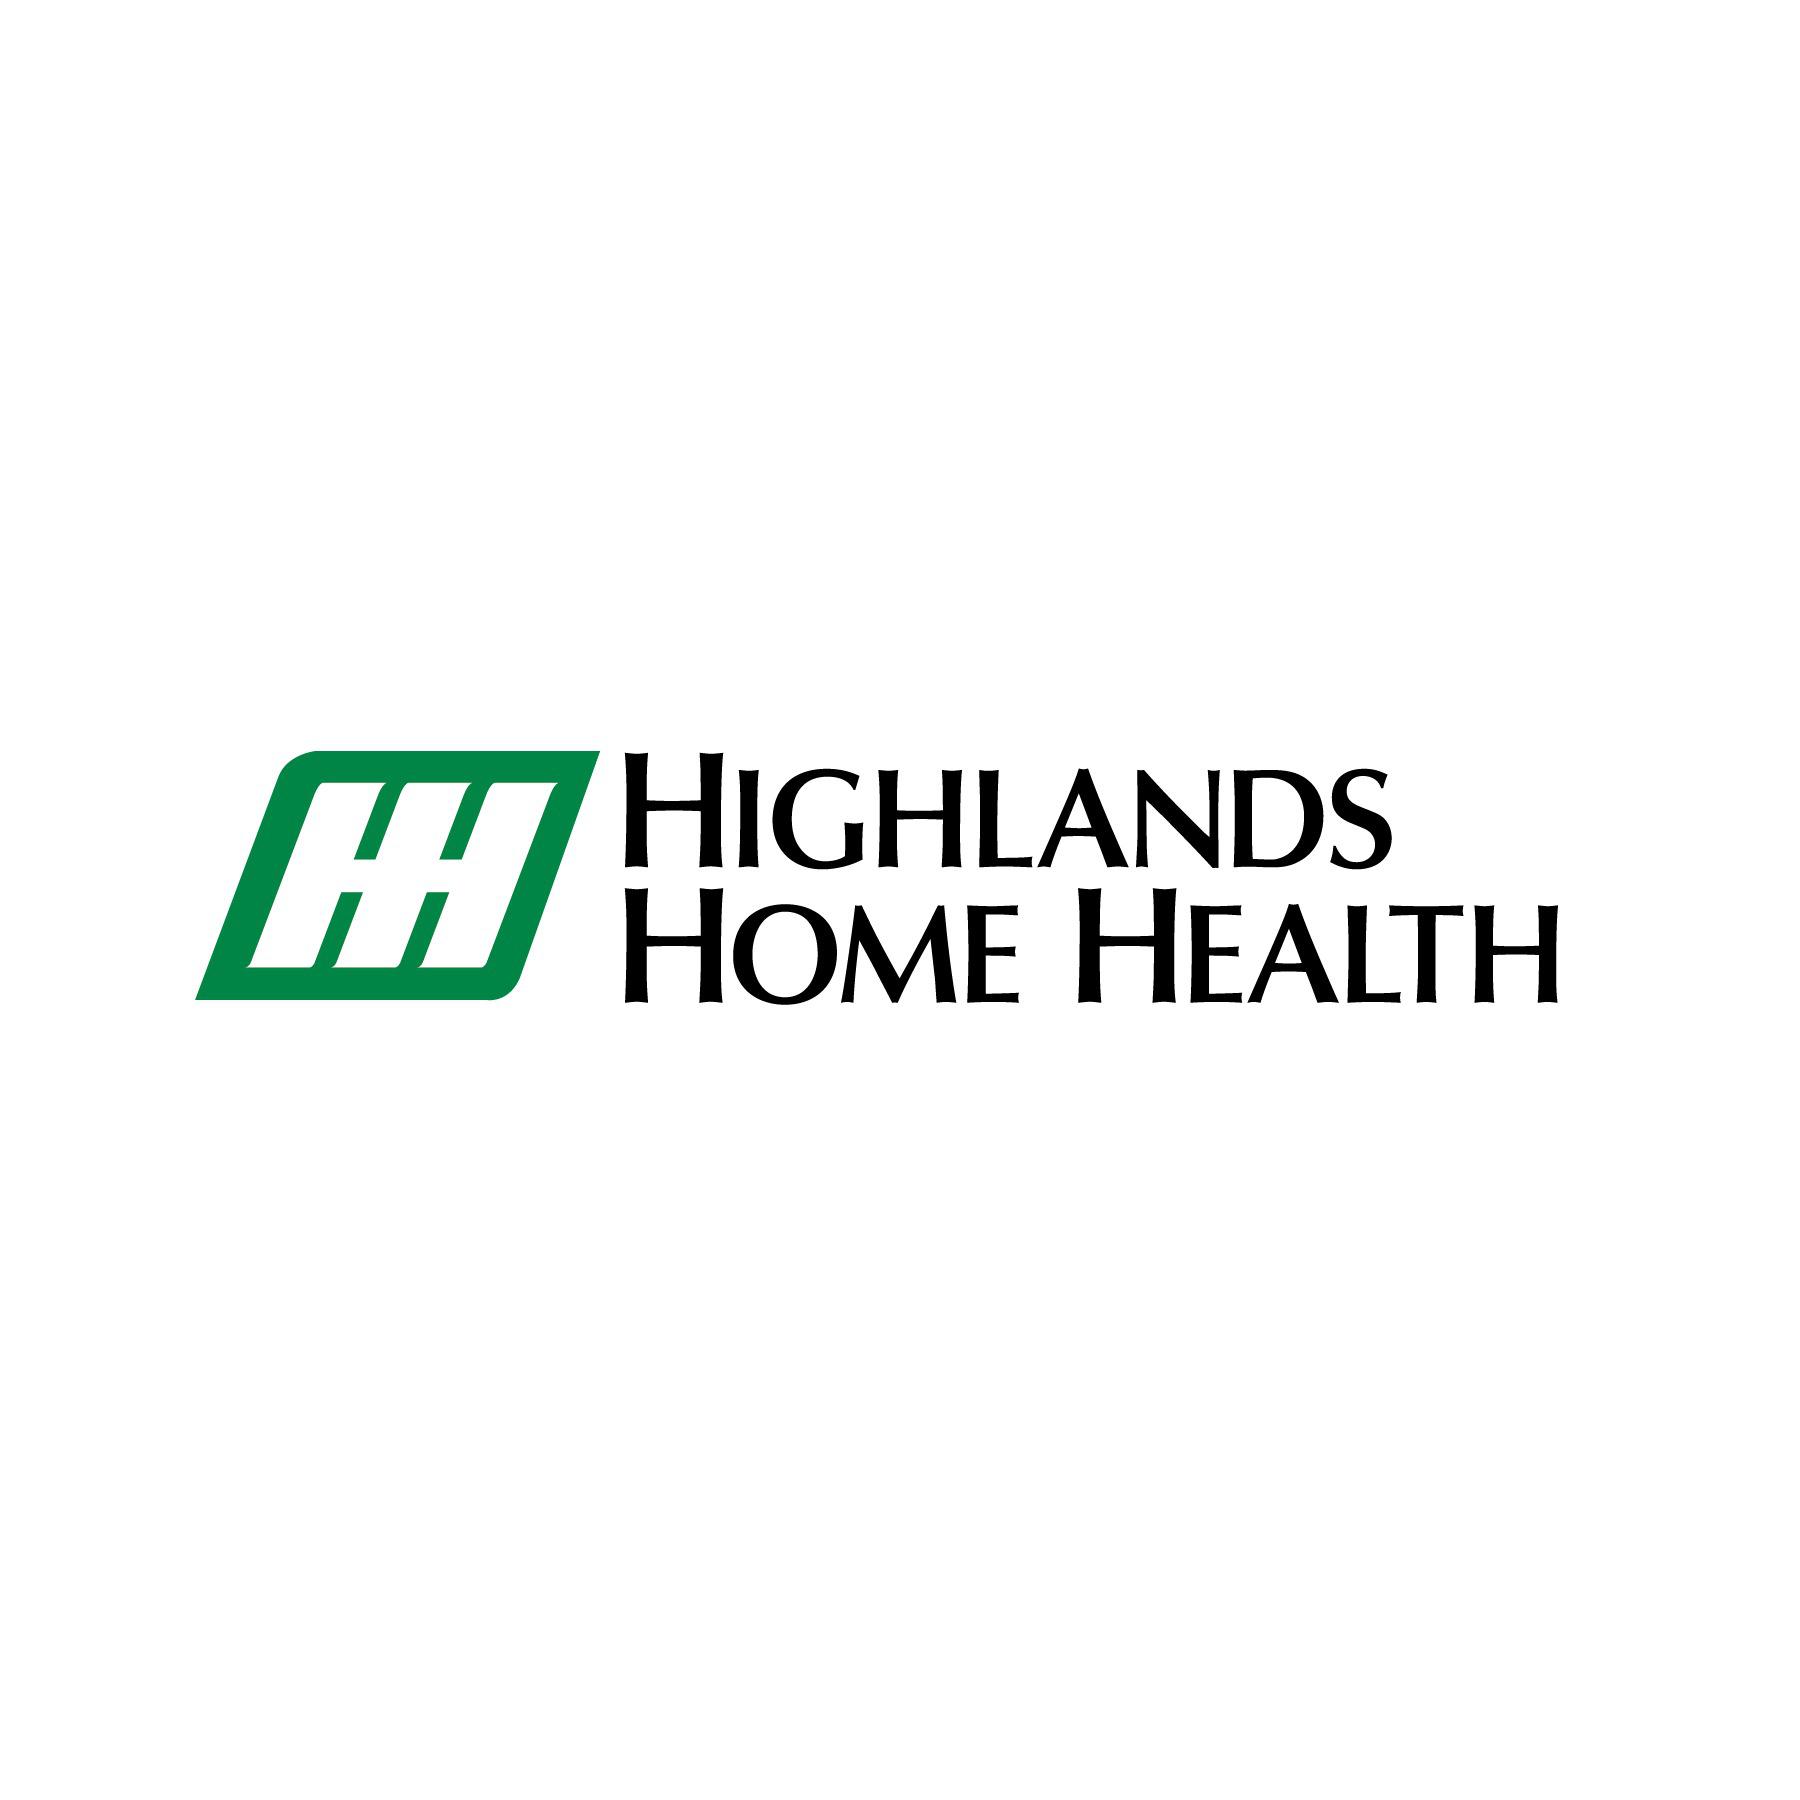 Highlands Home Health - Scottsboro, AL 35768 - (256)259-4840 | ShowMeLocal.com